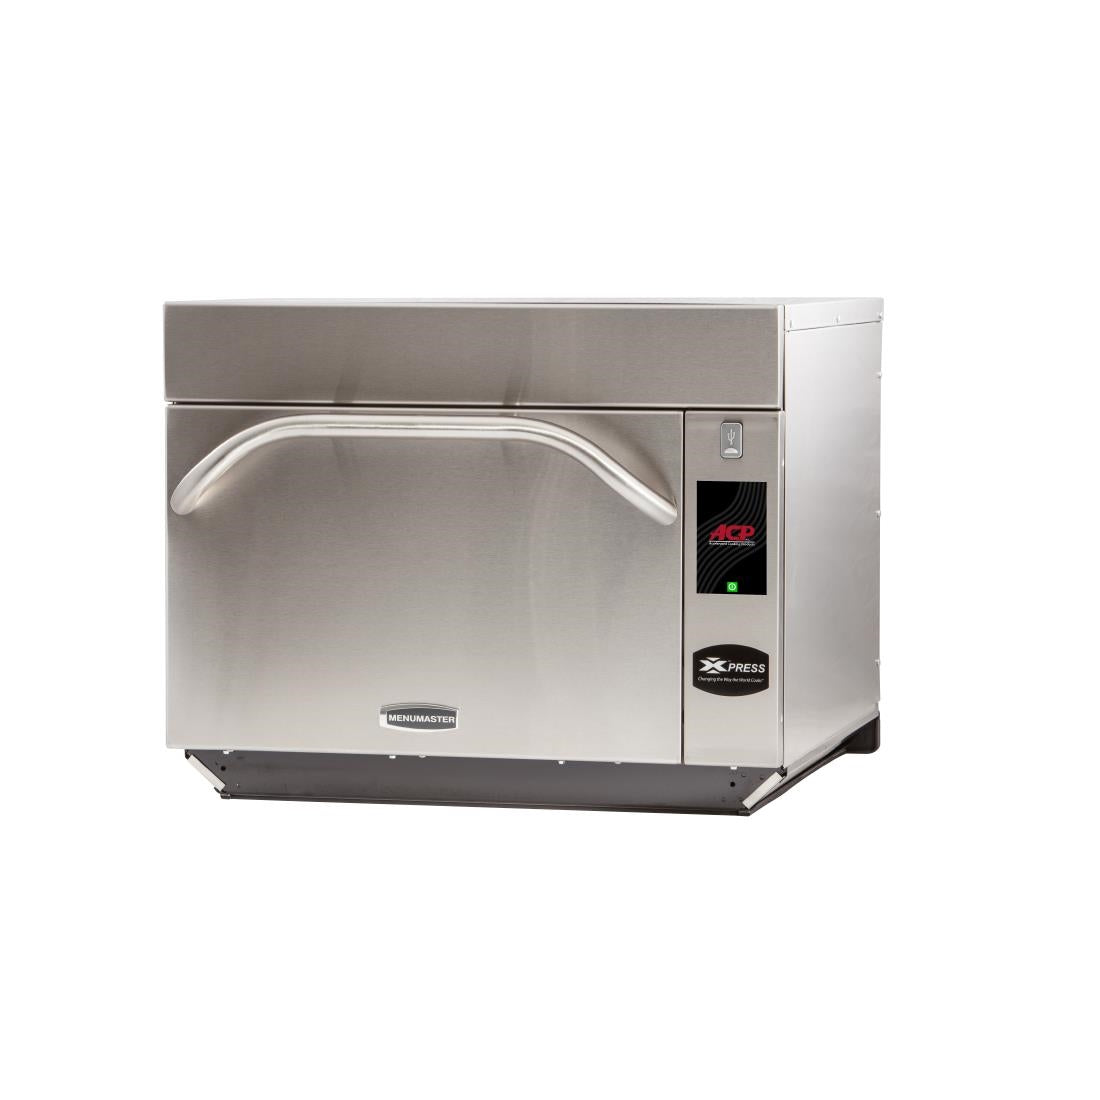 CR853 XpressChef High Speed Oven MXP5221 JD Catering Equipment Solutions Ltd